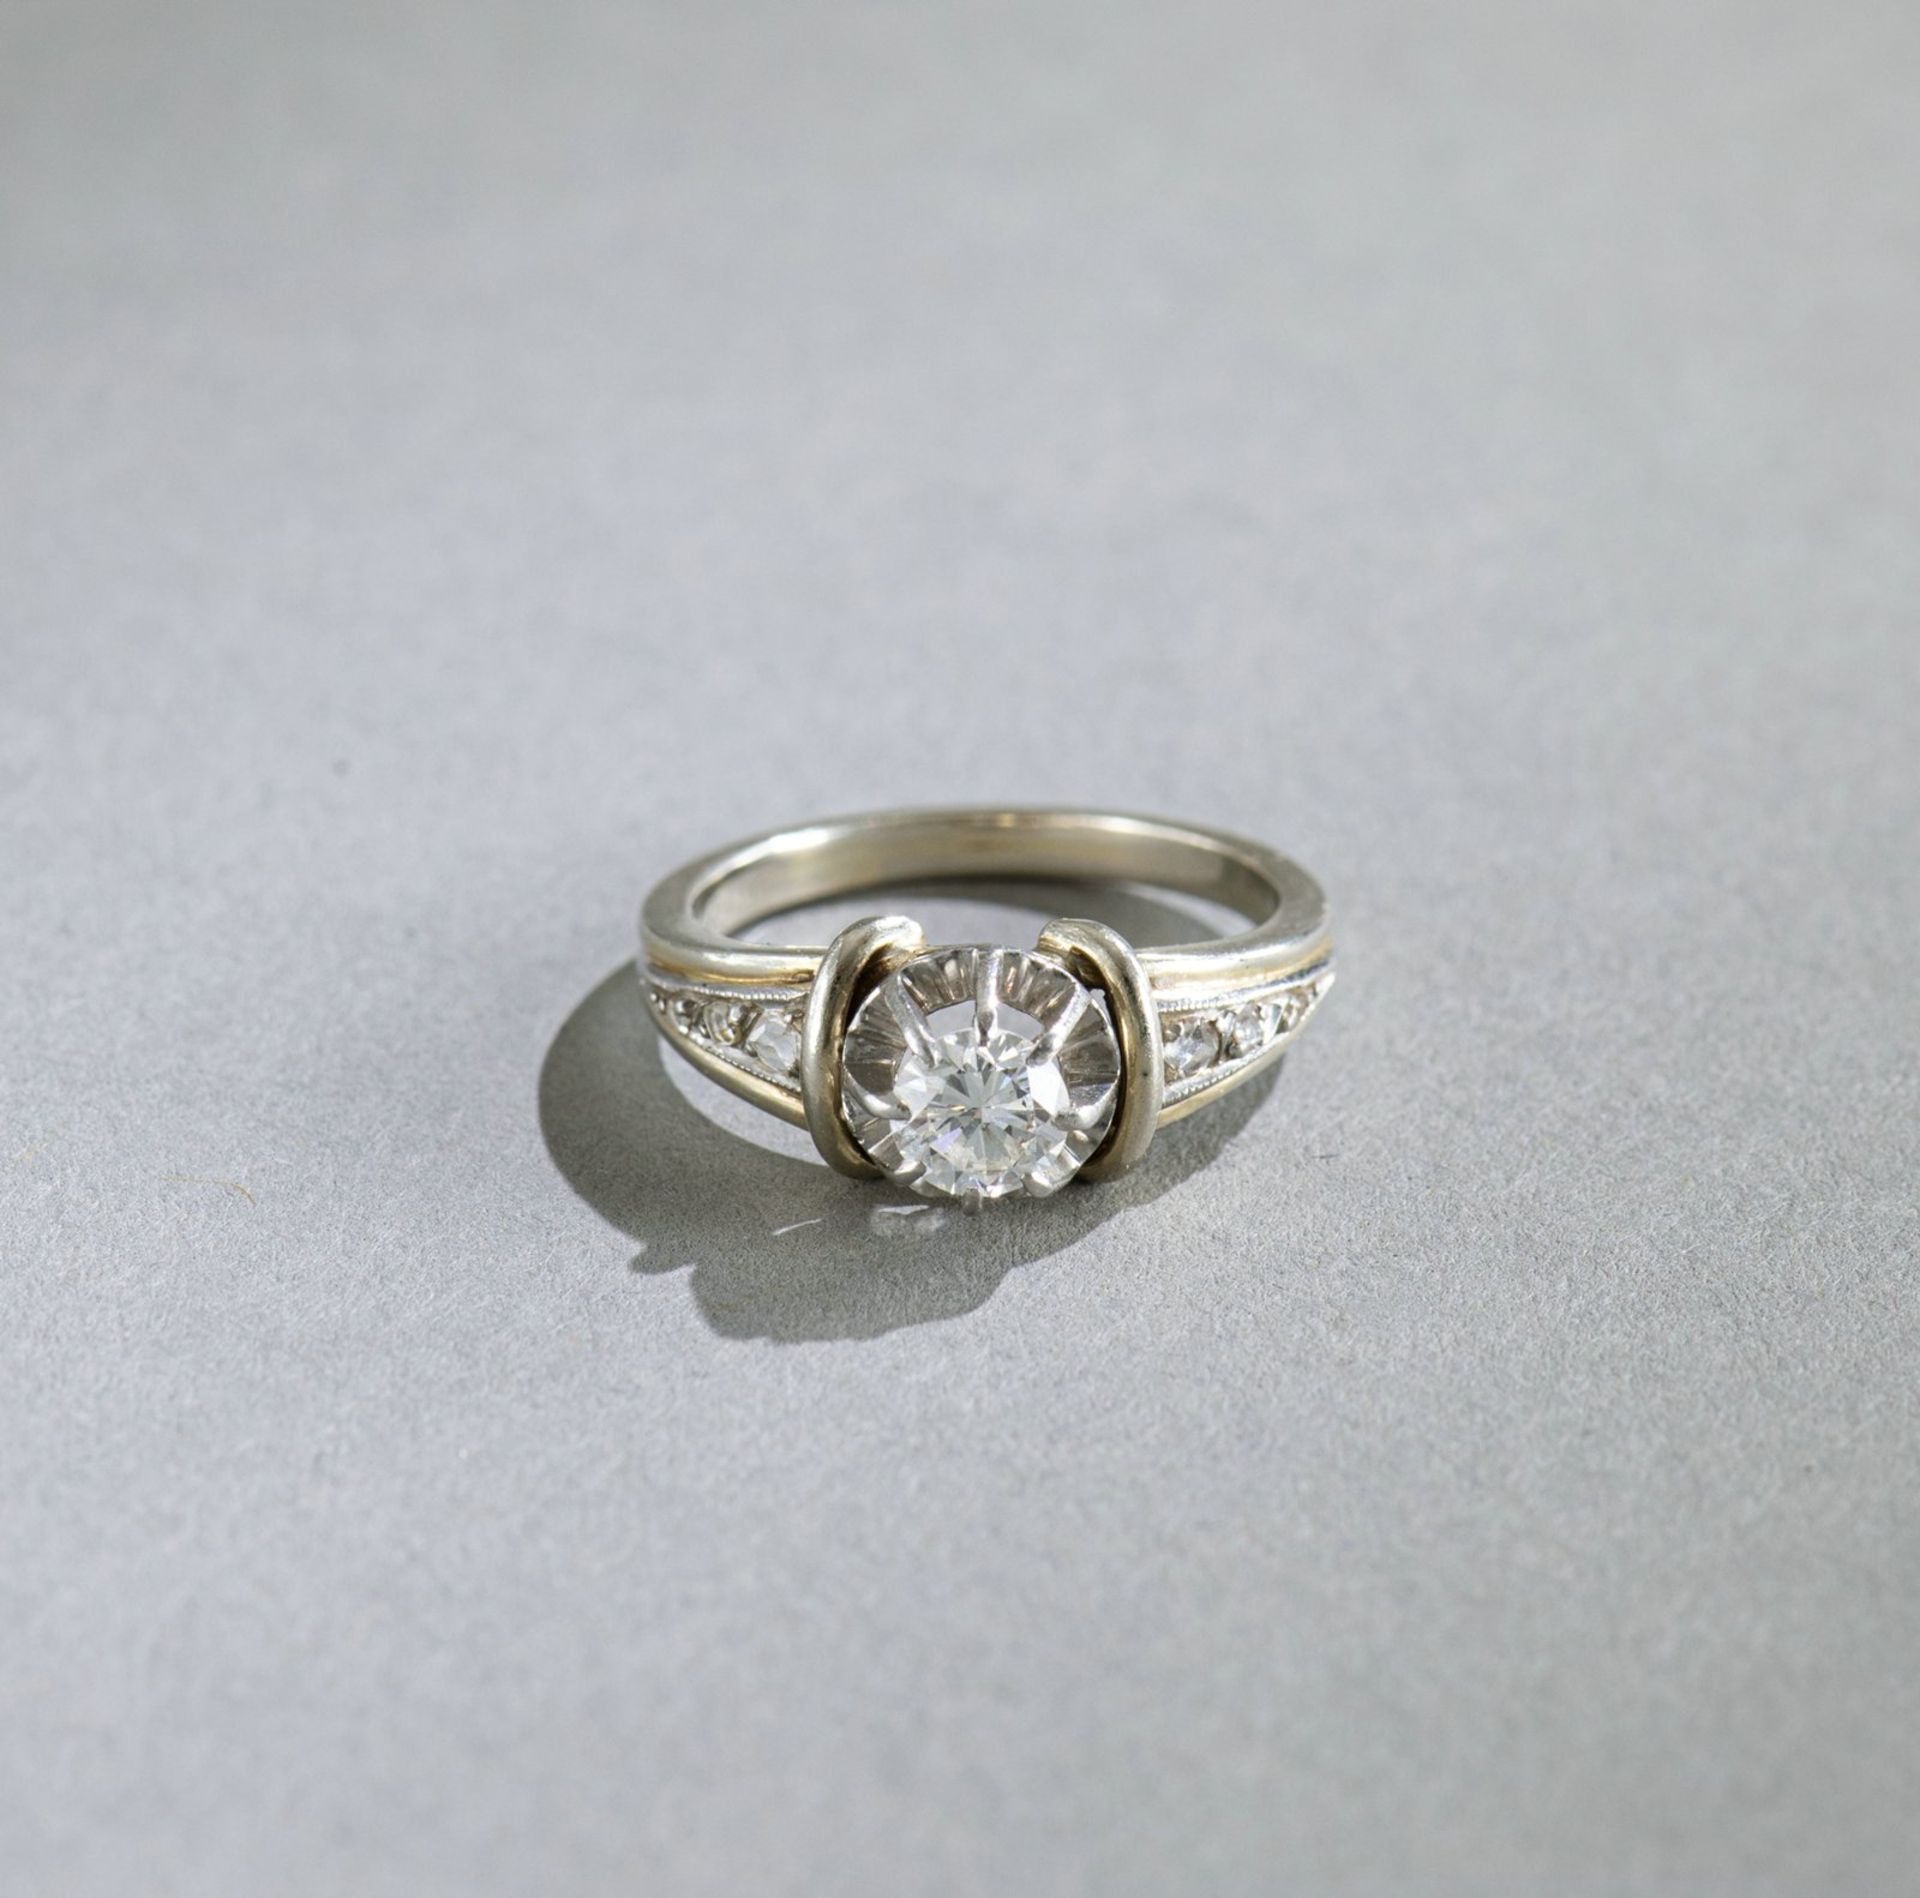 A DIAMOND RING - Image 6 of 7